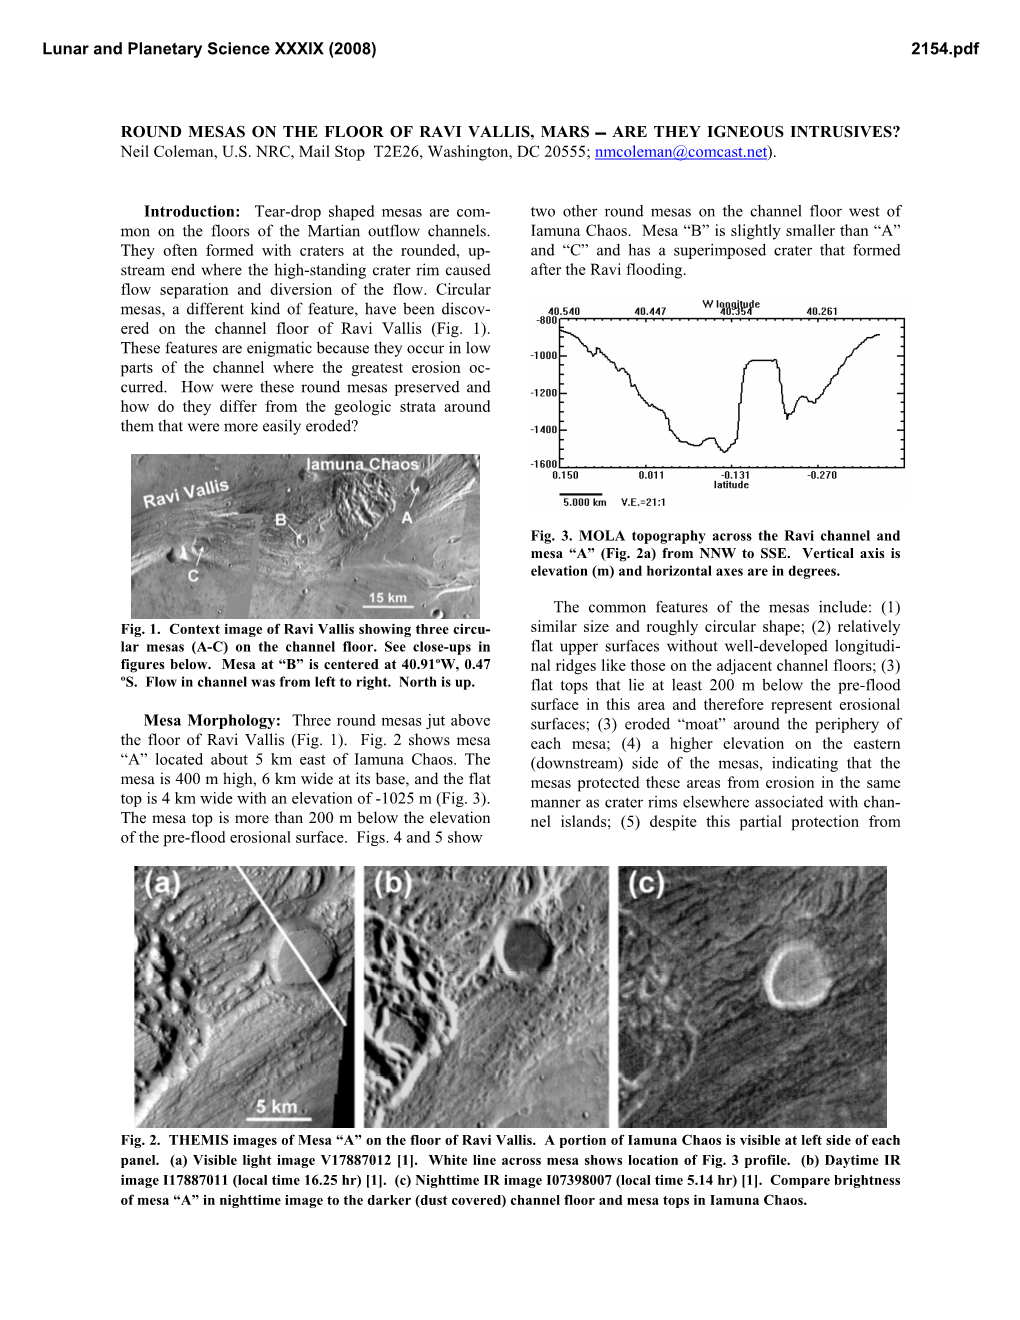 ROUND MESAS on the FLOOR of RAVI VALLIS, MARS  ARE THEY IGNEOUS INTRUSIVES? Neil Coleman, U.S